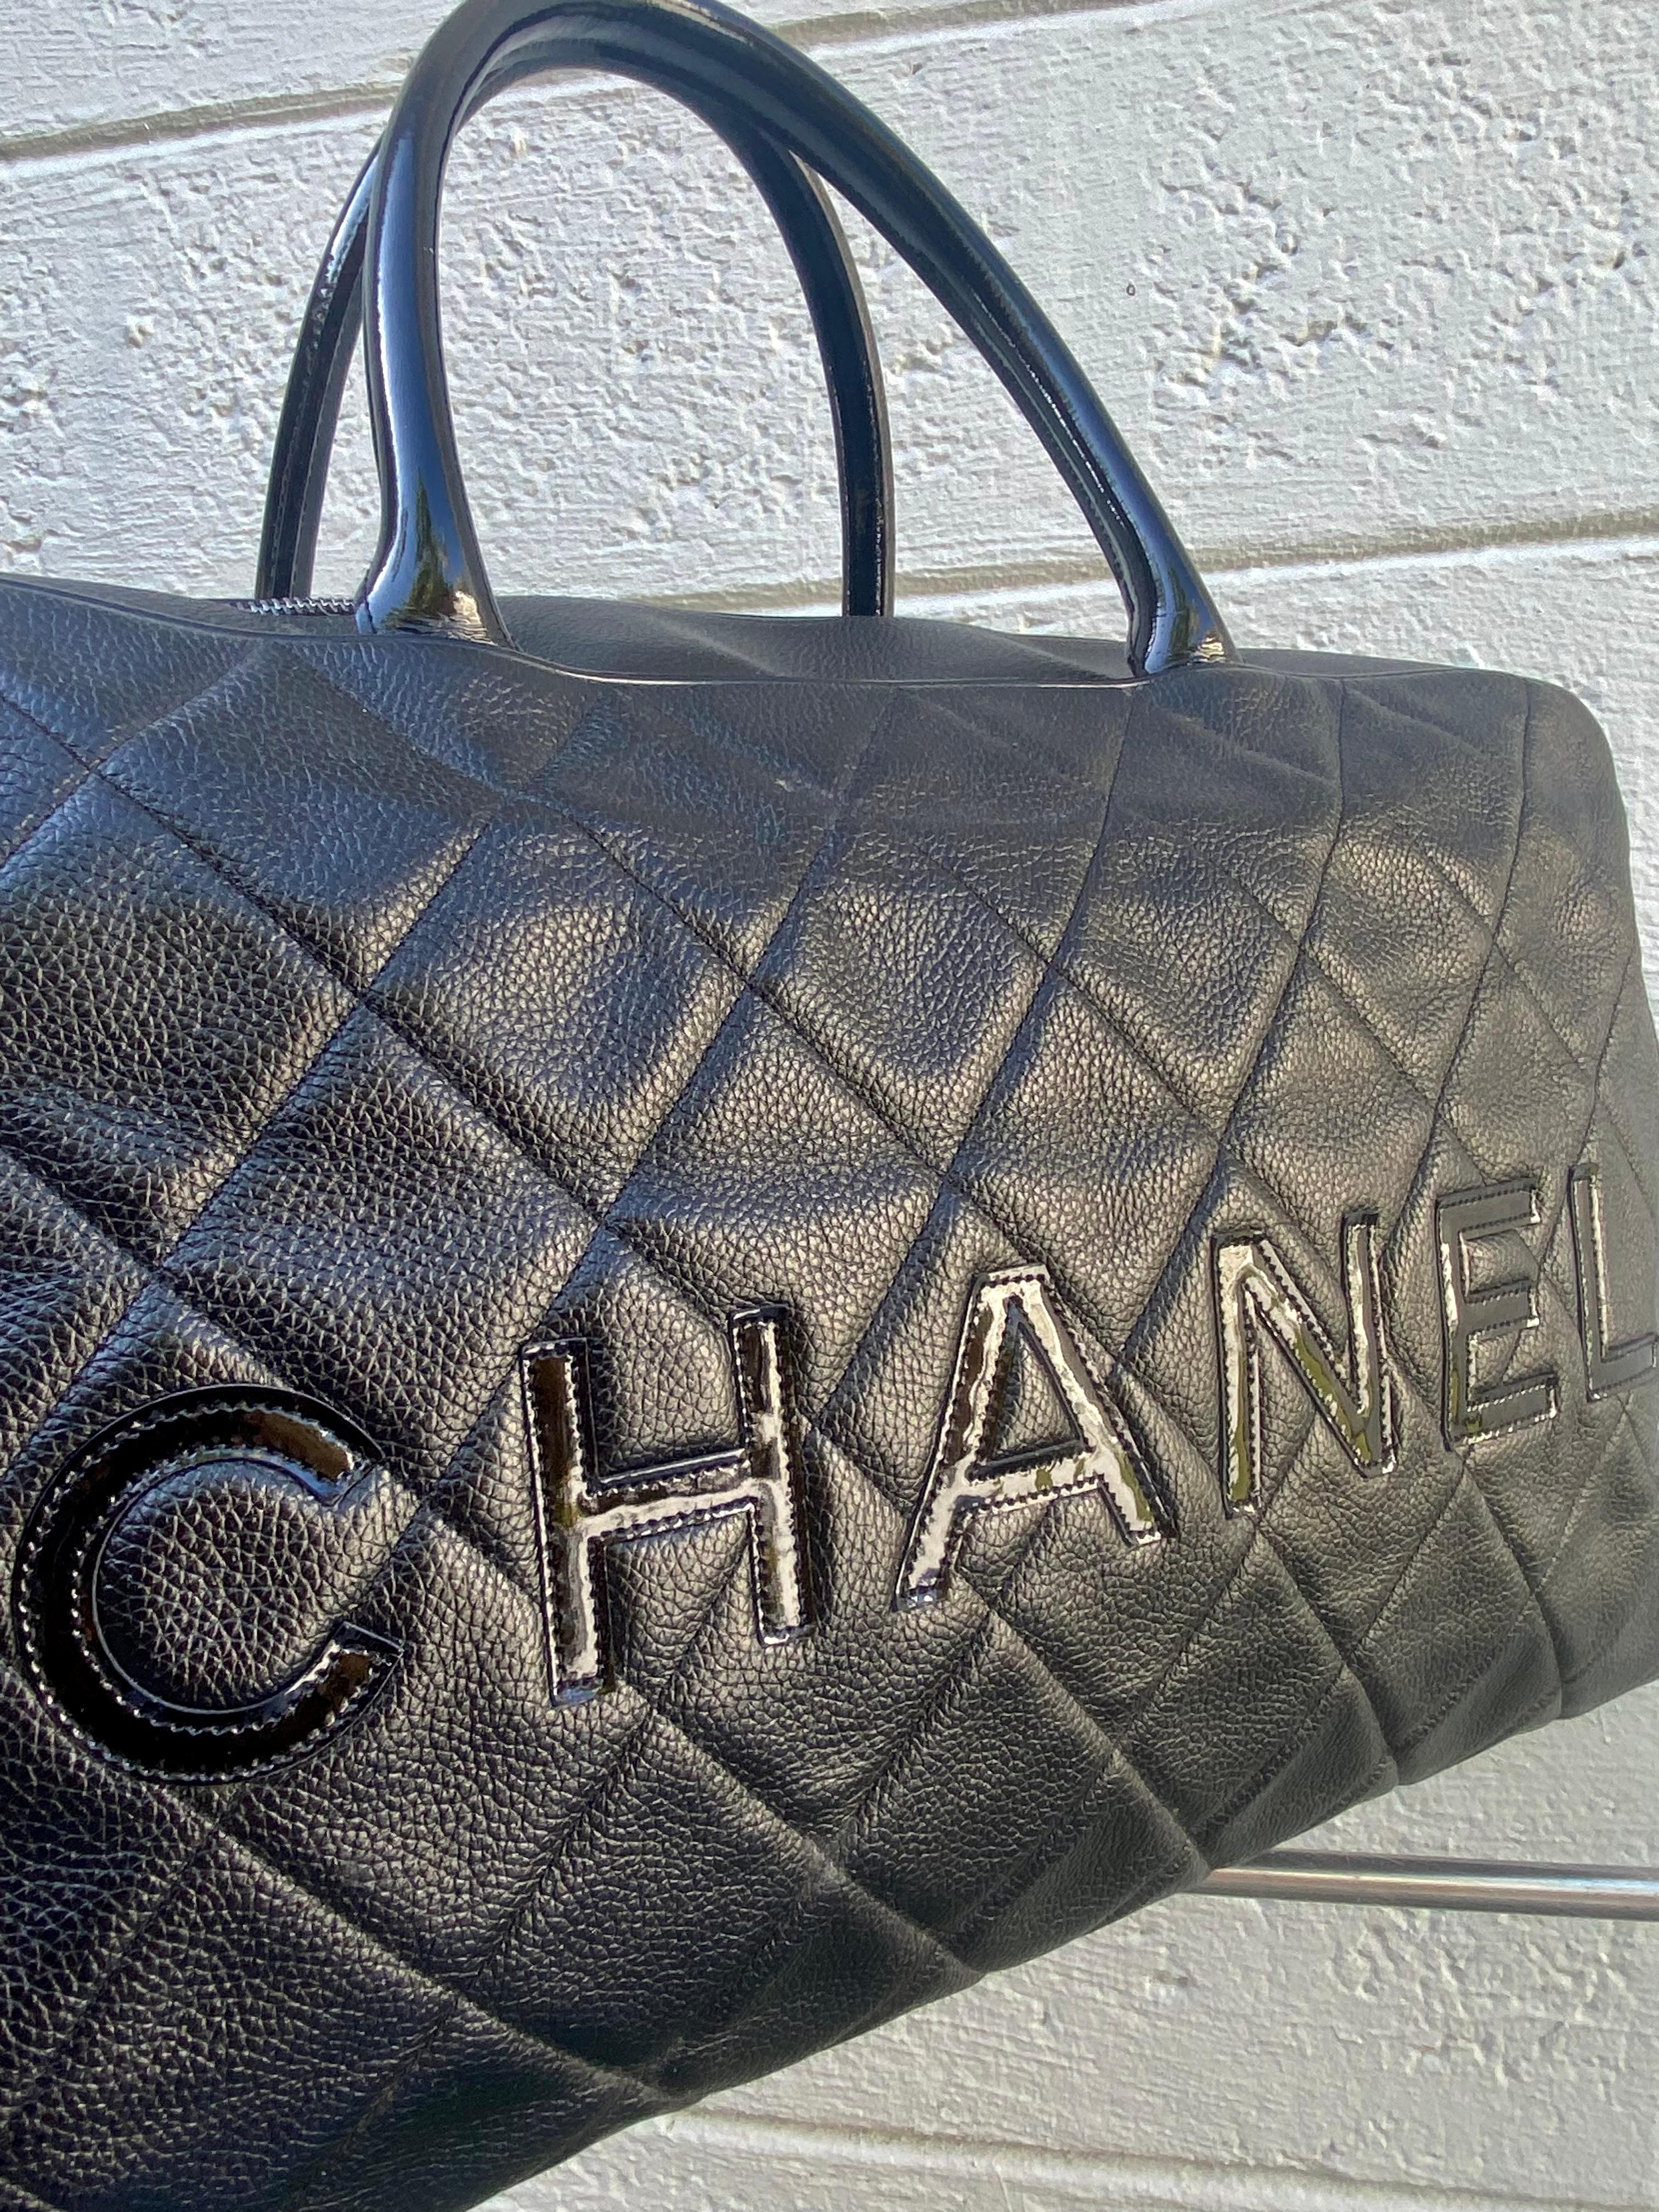 Chanel Rare Vintage Black Caviar Weekender Travel Duffle Shopper Bag For Sale 5